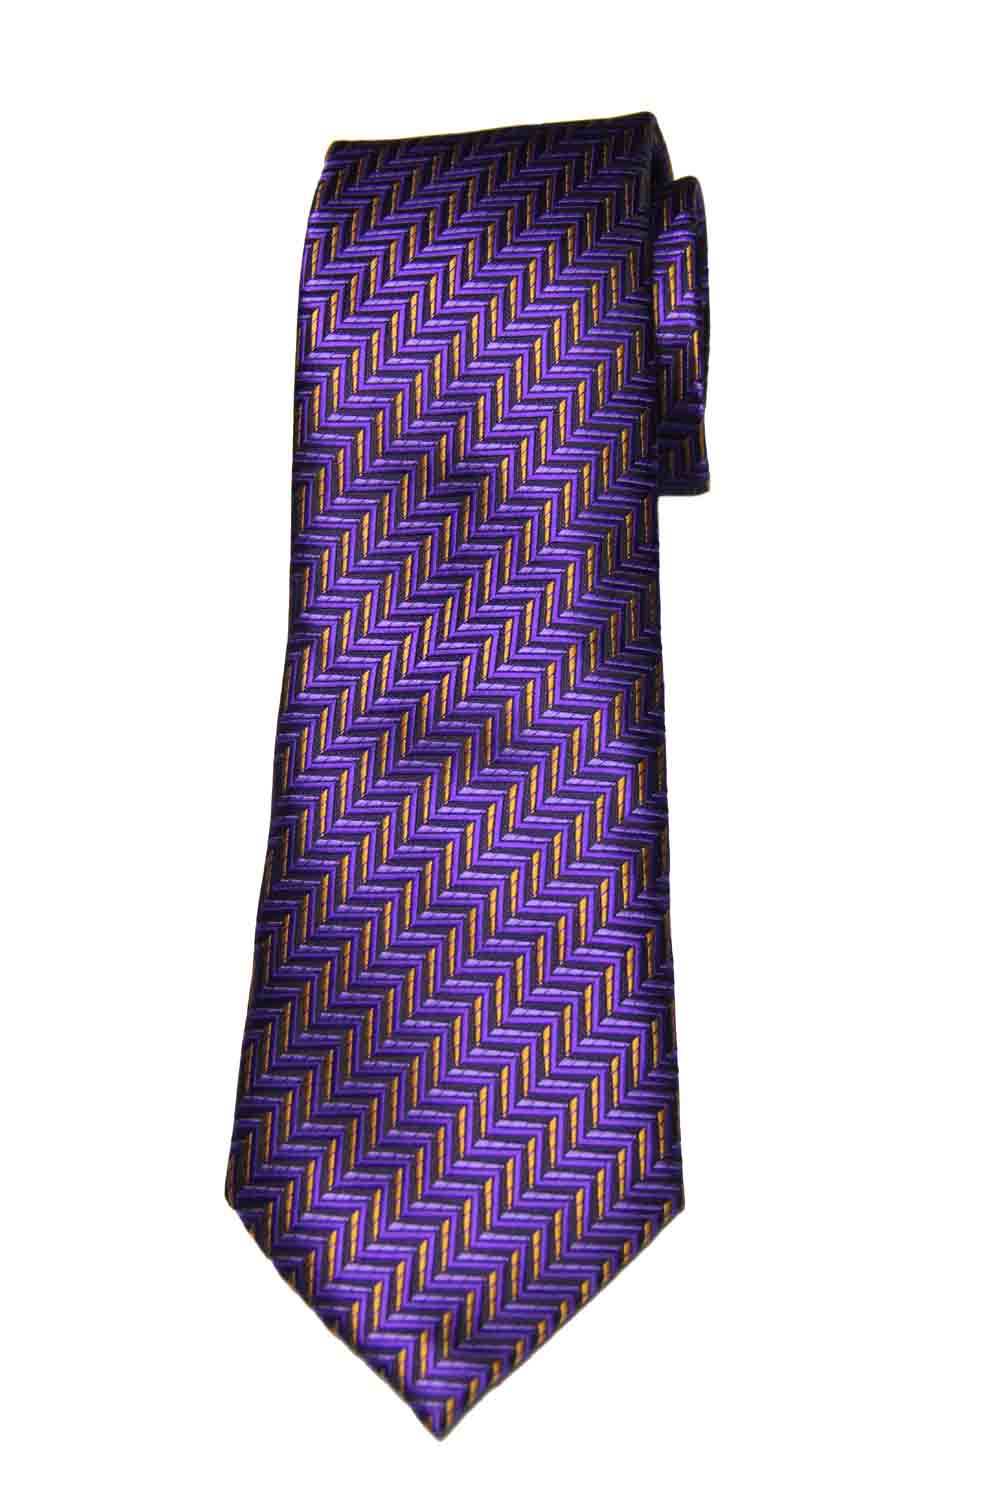 Gascoigne Italian Silk Tie Necktie Purple Black Gold Orange Geometric Men's Long